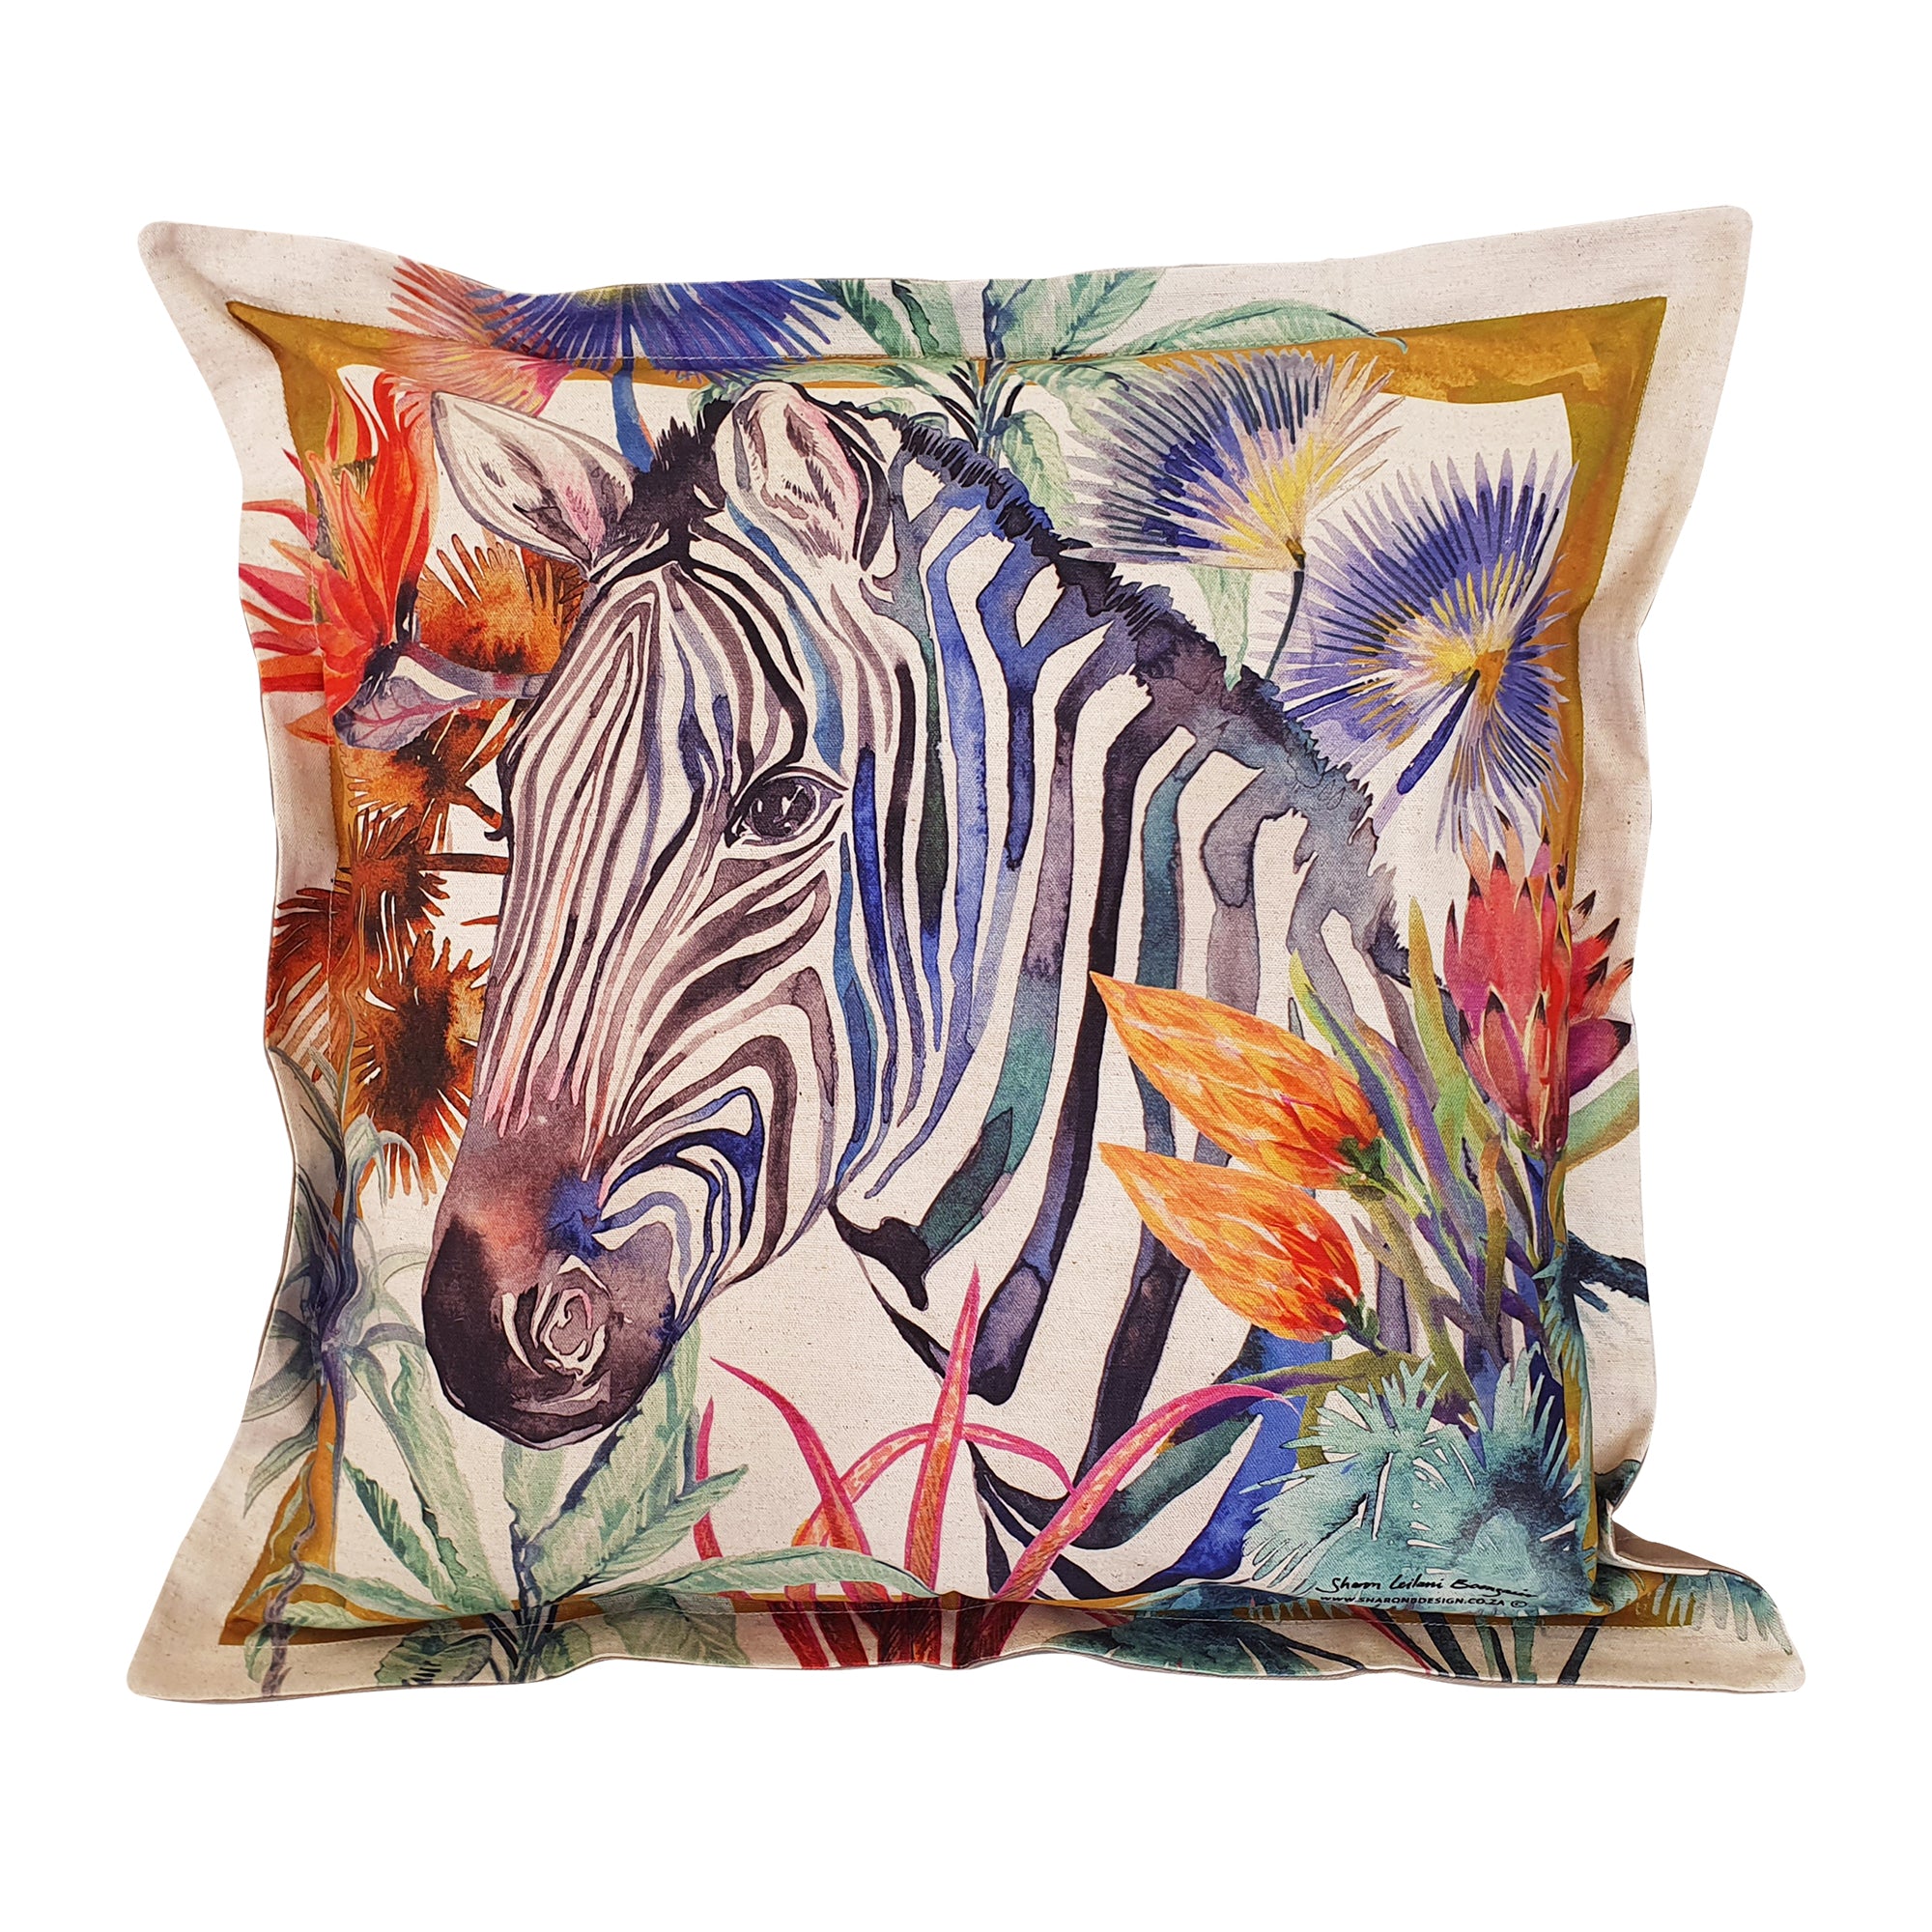 Zebra Cushion Cover (Cotton-linen blend)